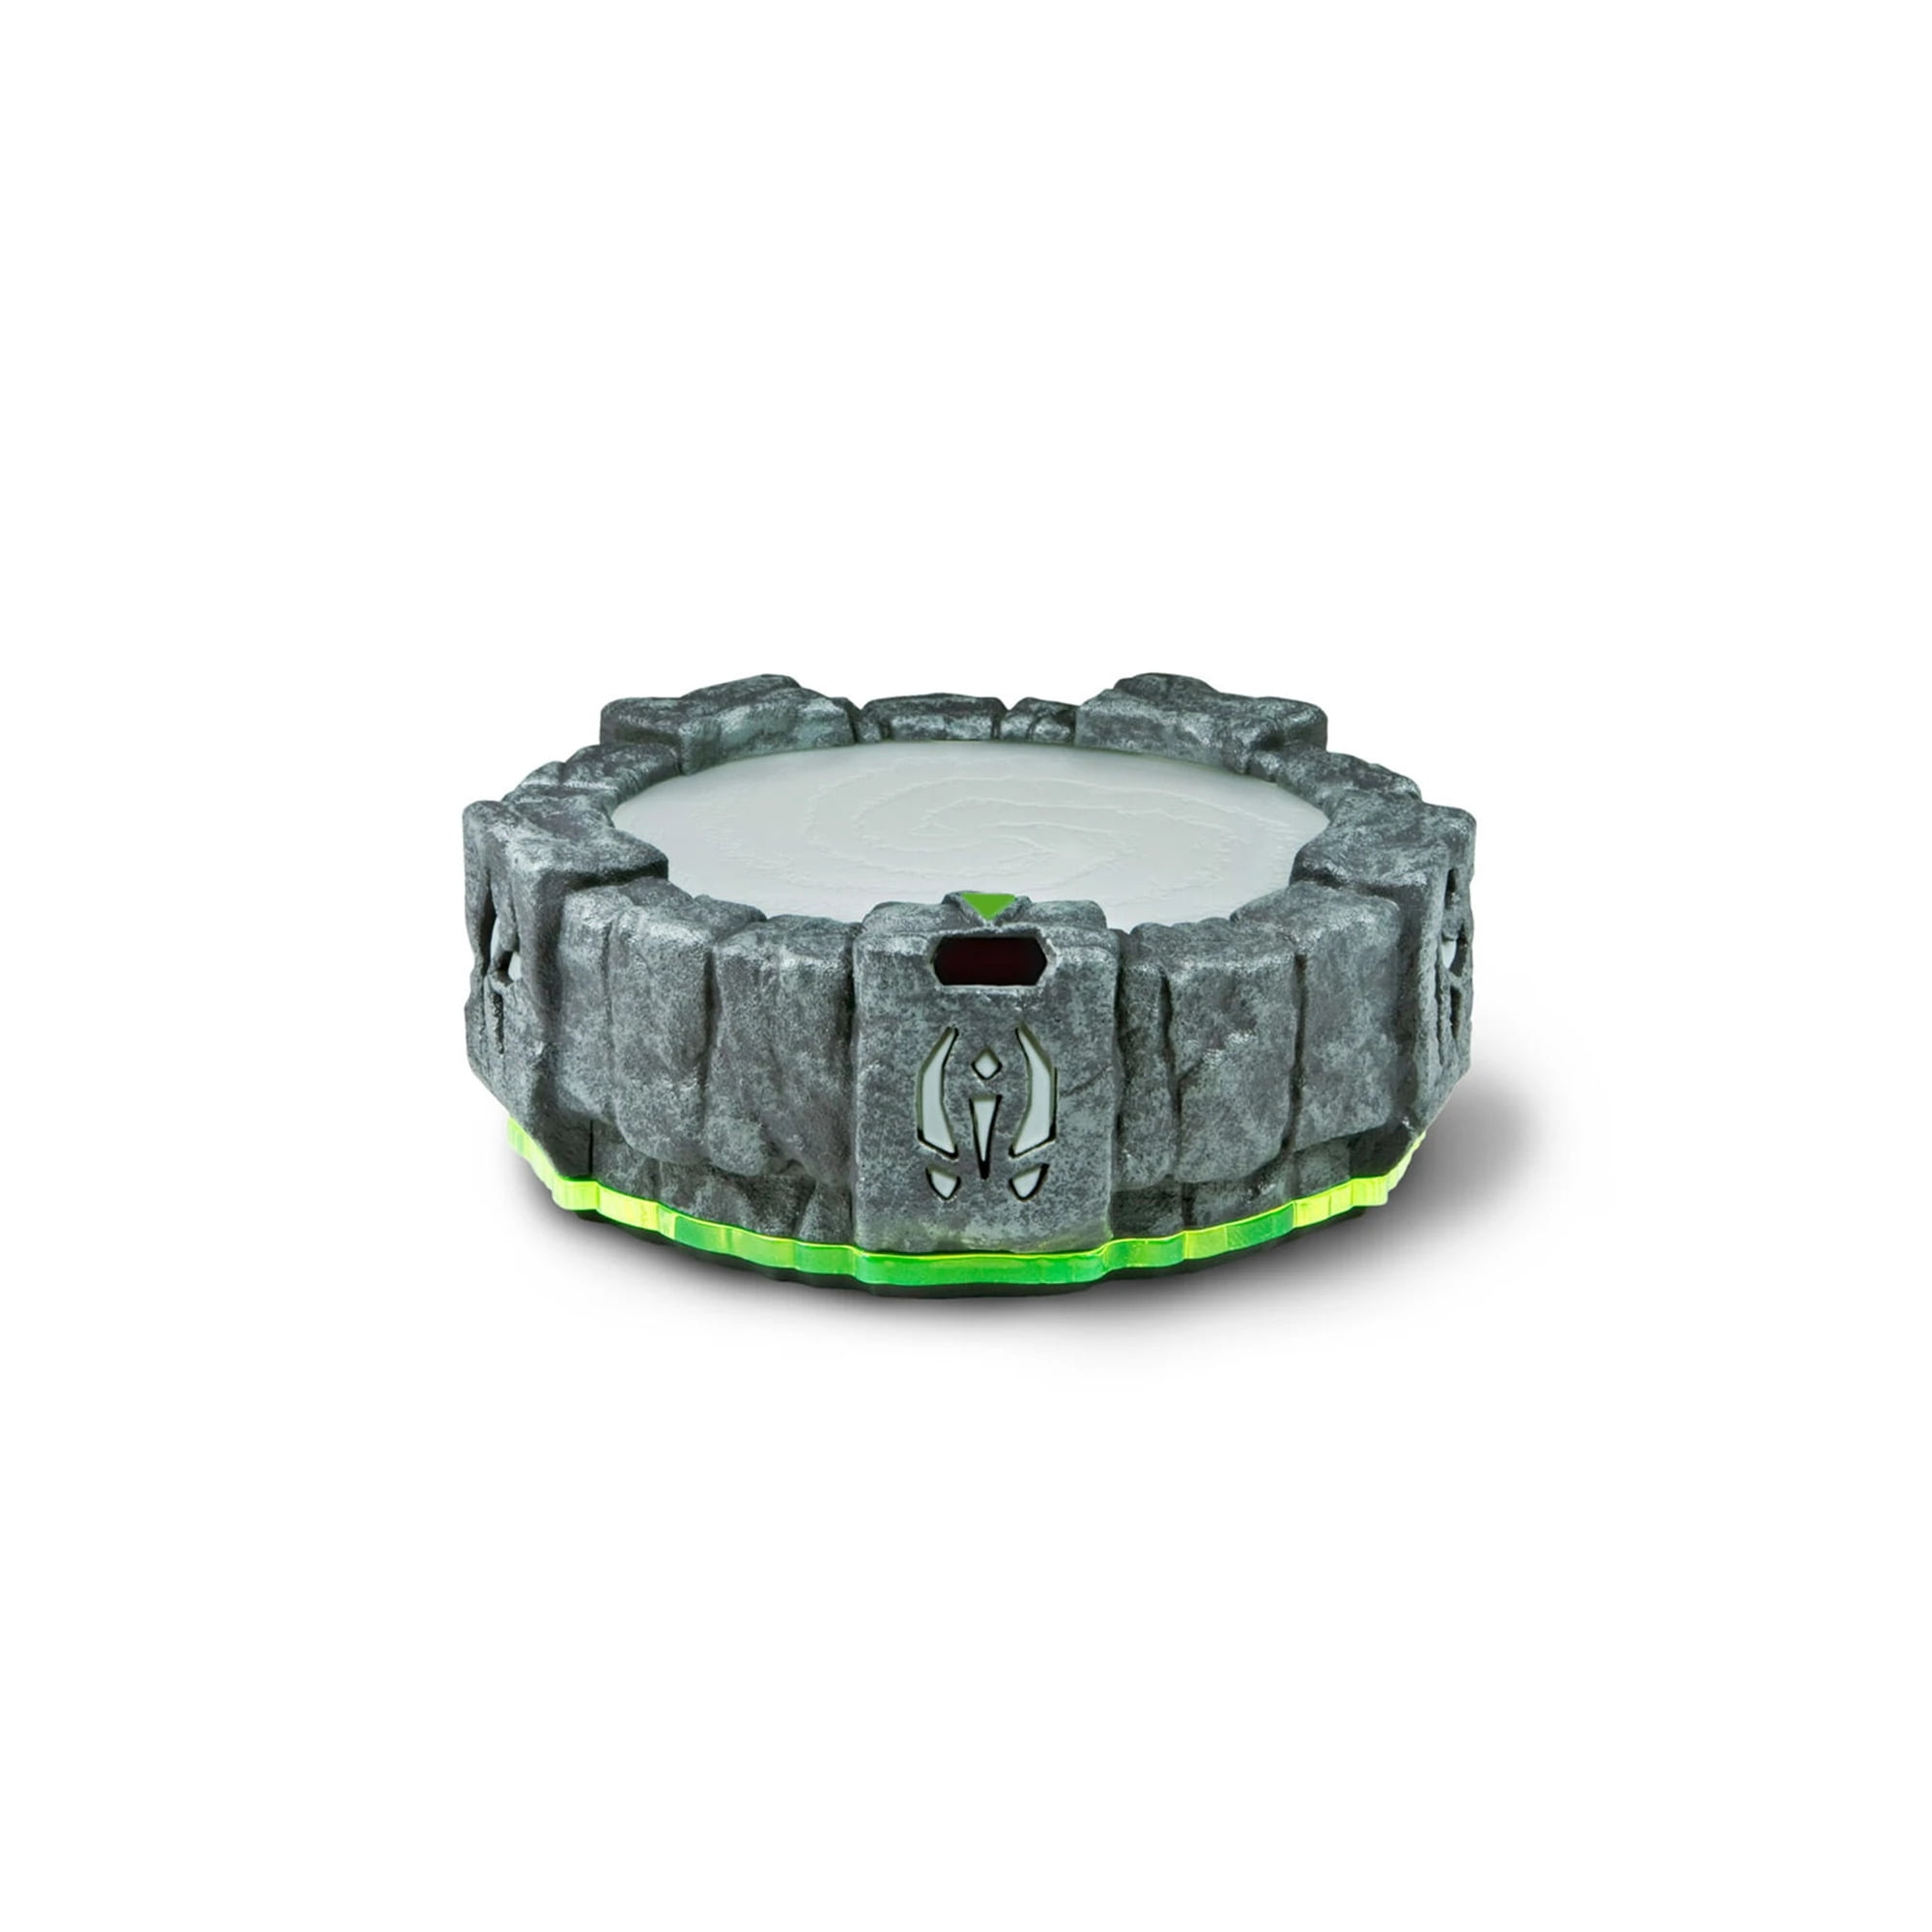 Skylanders Superchargers Portal of Power Xbox One - New In Bulk Packaging - Walmart.com